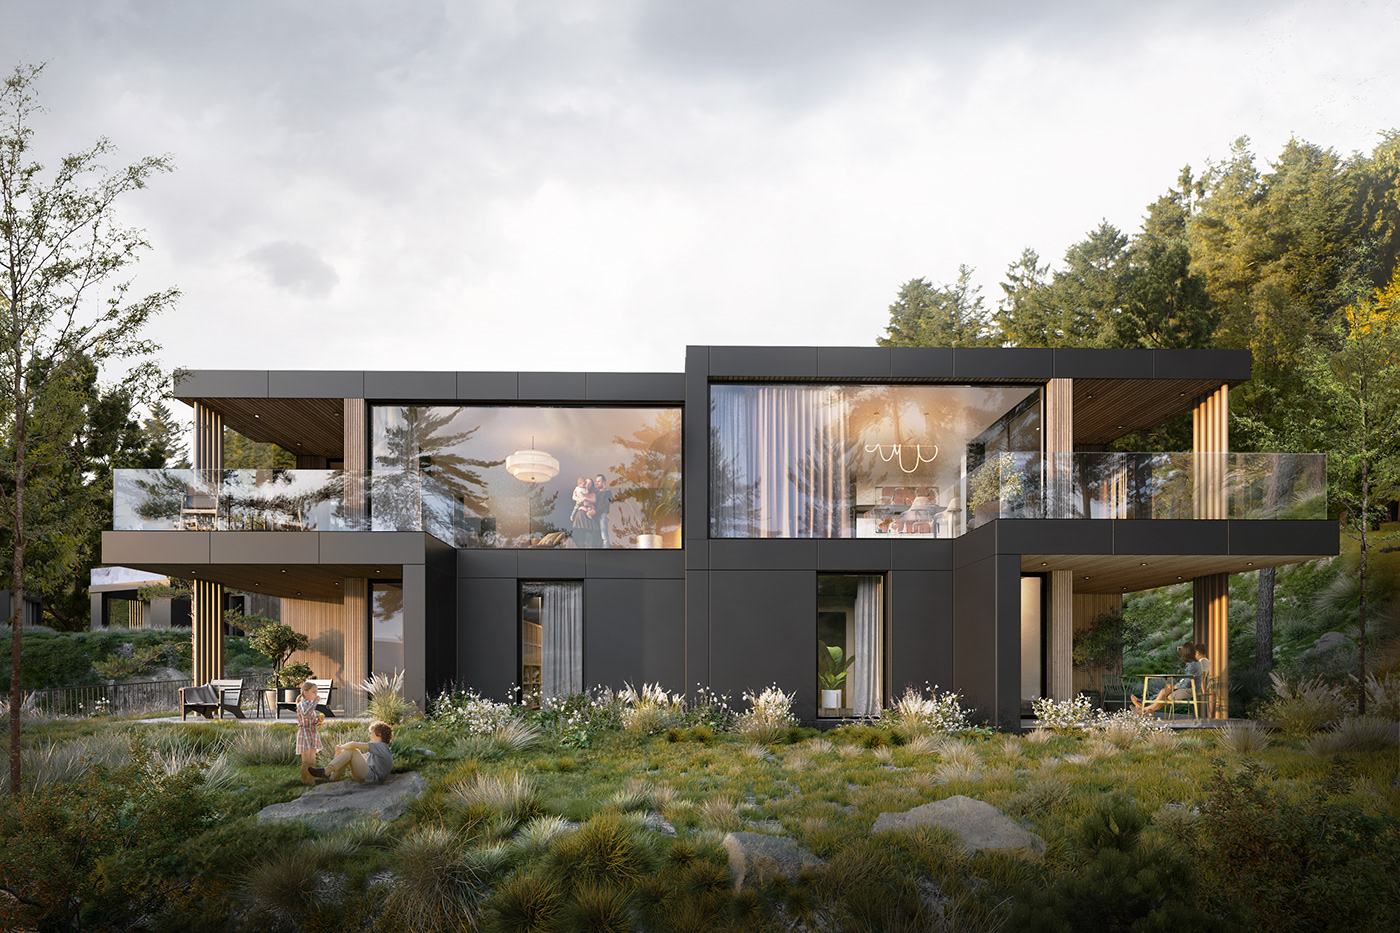 Sleek modern building nestled in Norway's picturesque Bergen forest, overlooking the sea. 